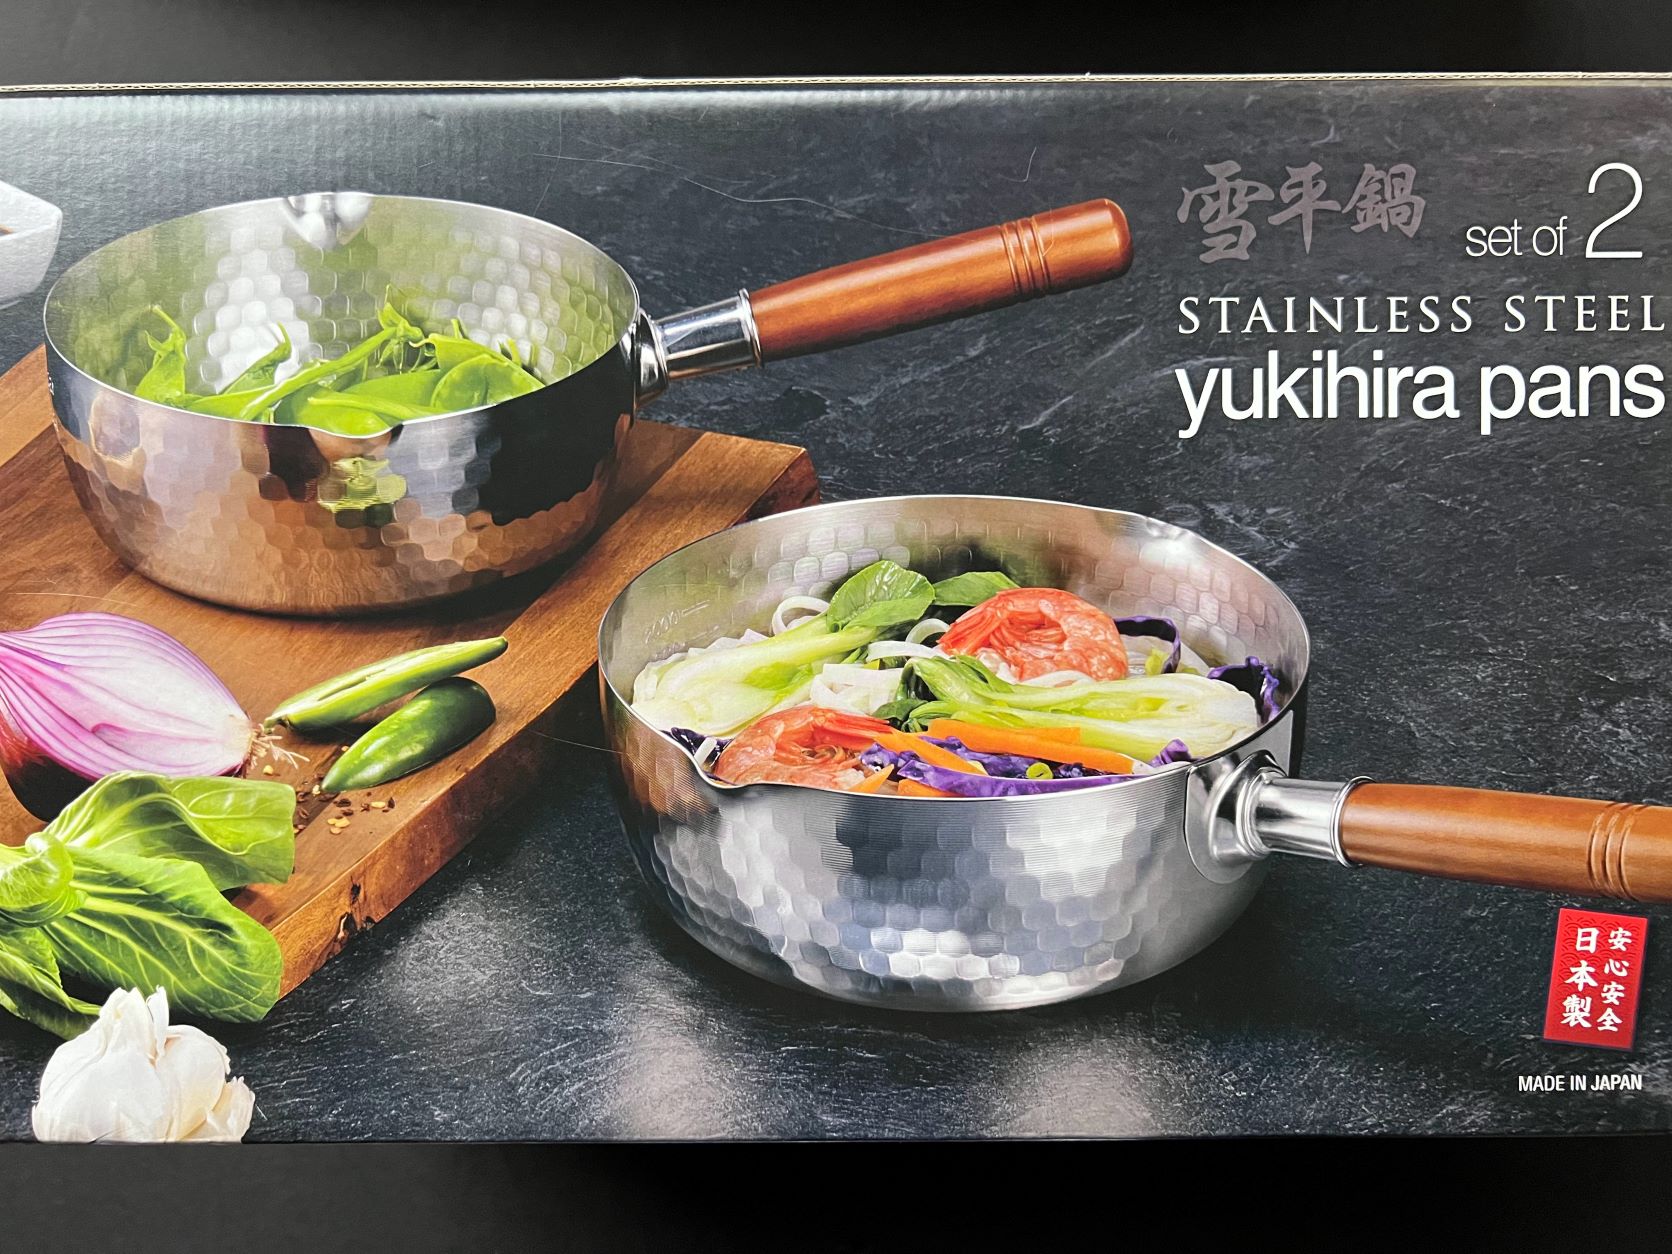 Double Set of Yukihira Japanese Stainless Steel Pans